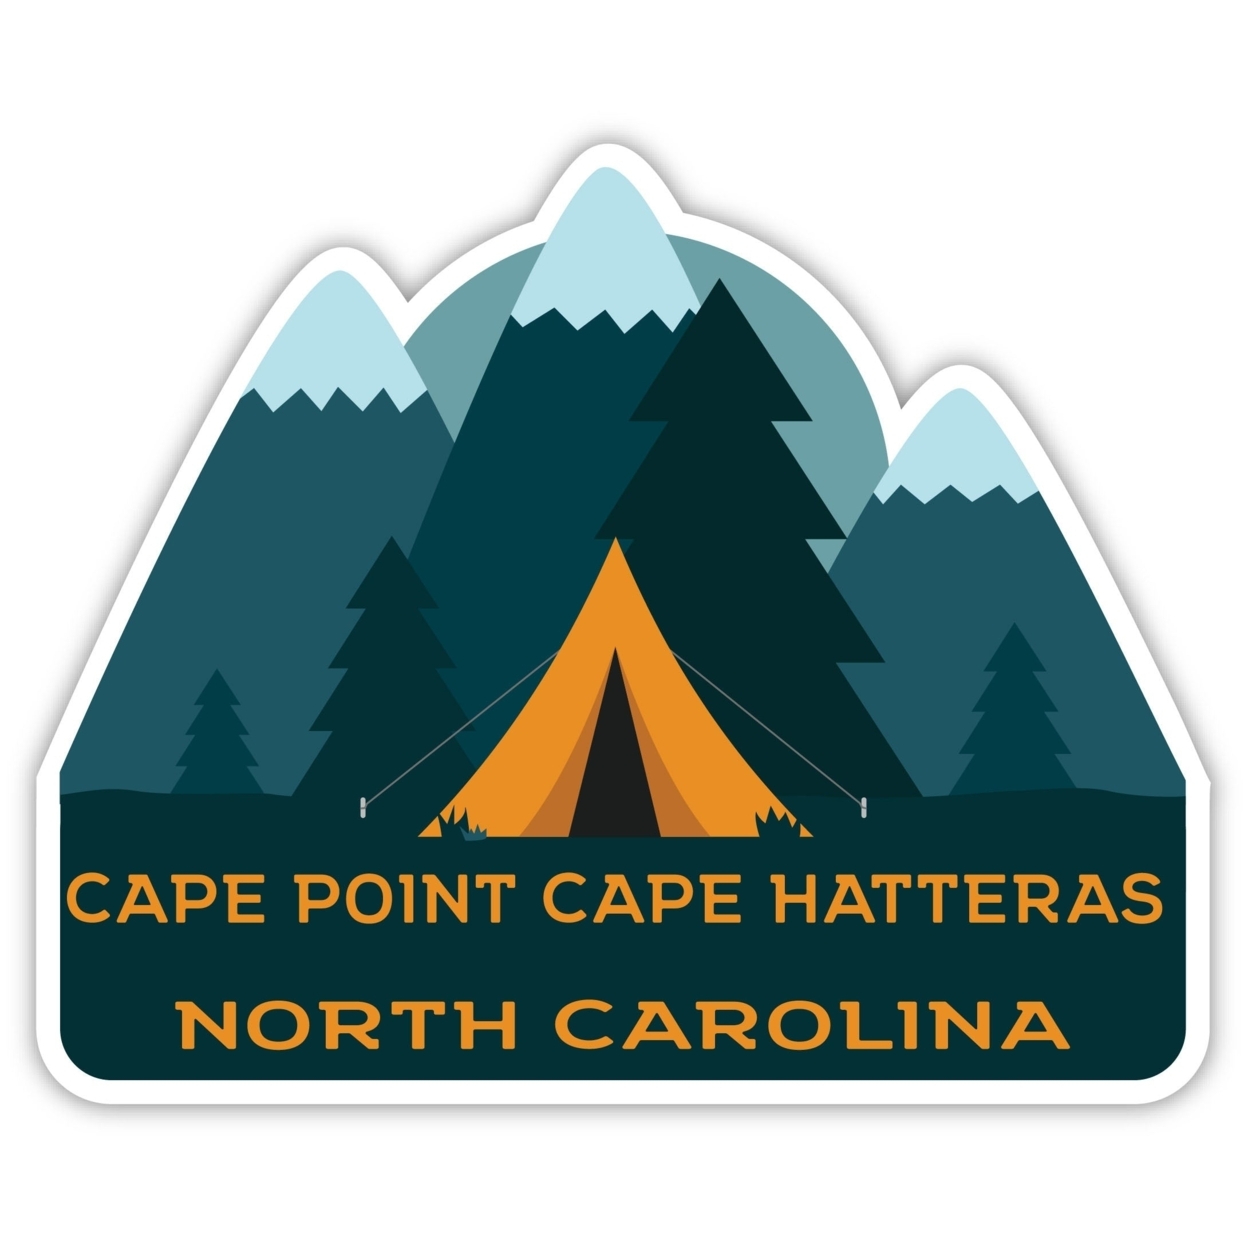 Cape Point Cape Hatteras North Carolina Souvenir Decorative Stickers (Choose Theme And Size) - Single Unit, 8-Inch, Tent